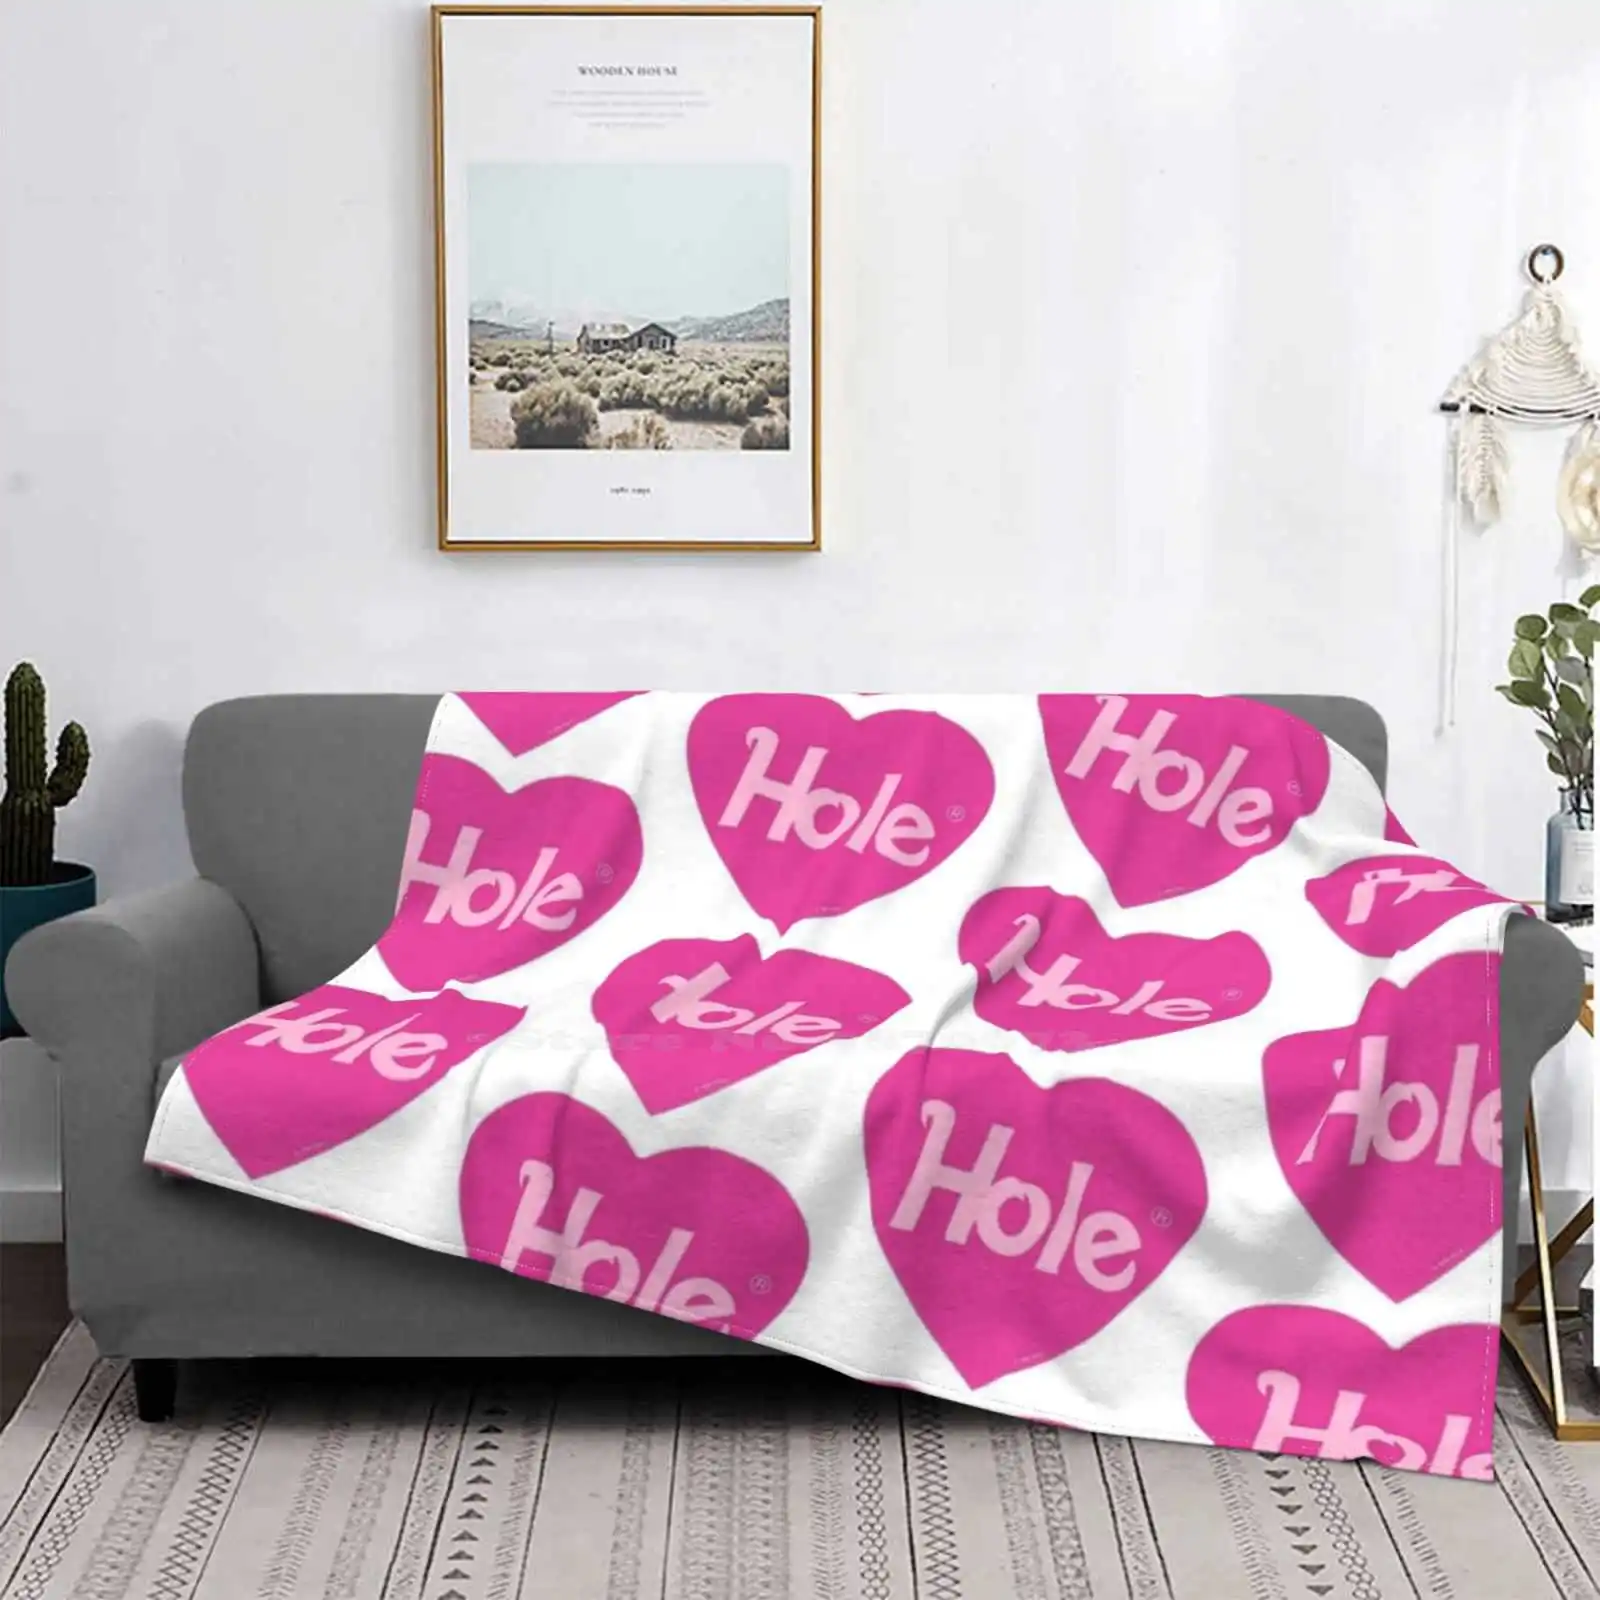 

Hole Heart 1994 Logo All Sizes Soft Cover Blanket Home Decor Bedding Courtney Love Hole 90S Kinderwhore Grunge